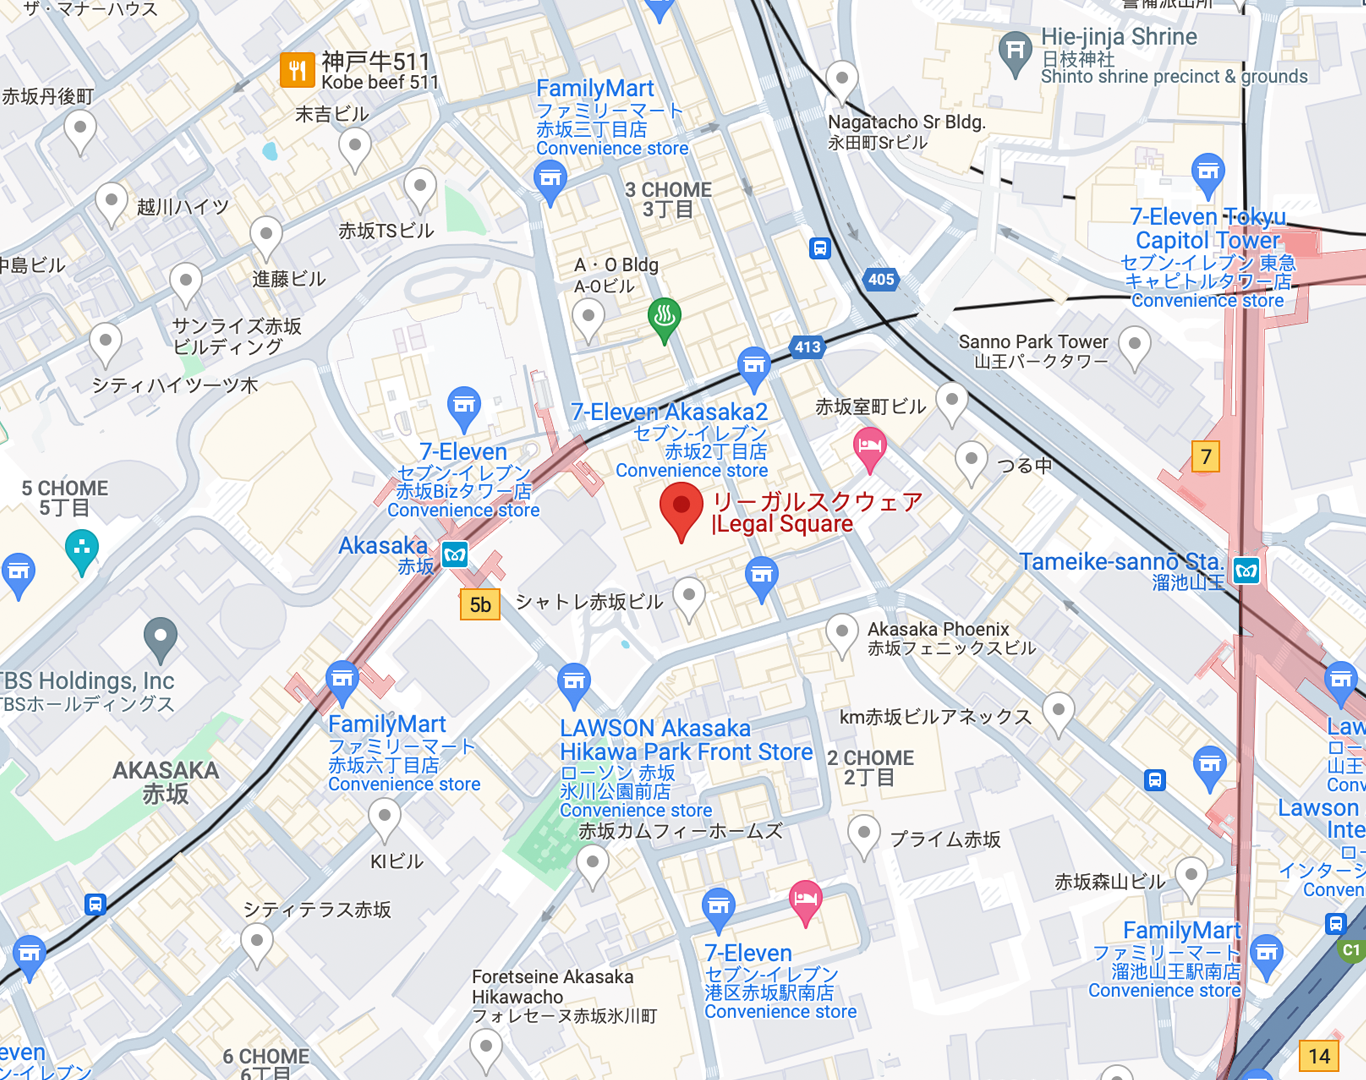 Levine Bagade Han Japan Locationon Google Maps - Link opens in new window